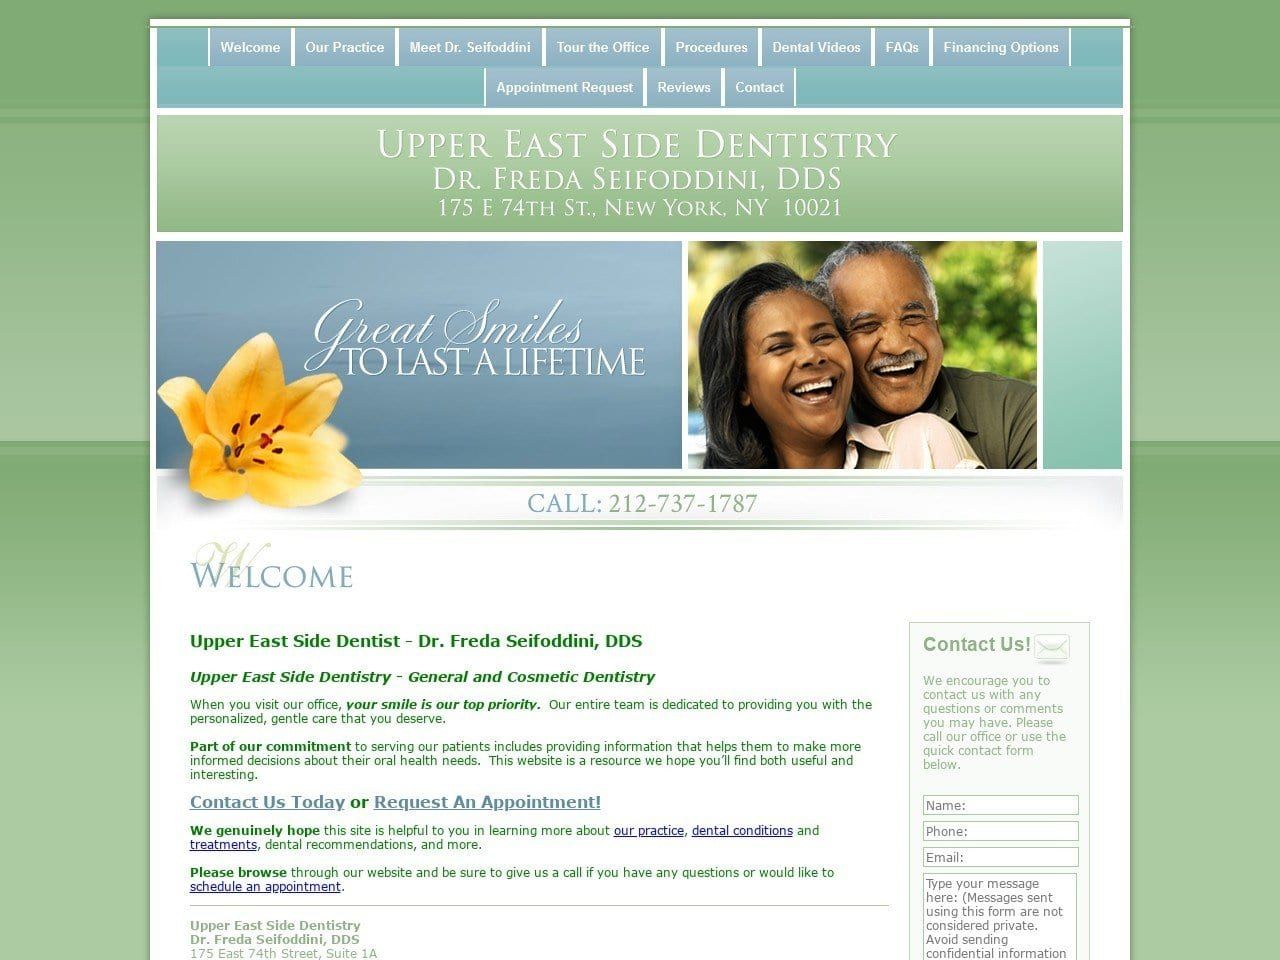 Dr. Freda Seifoddini DDS Website Screenshot from uppereastsidedentistry.com